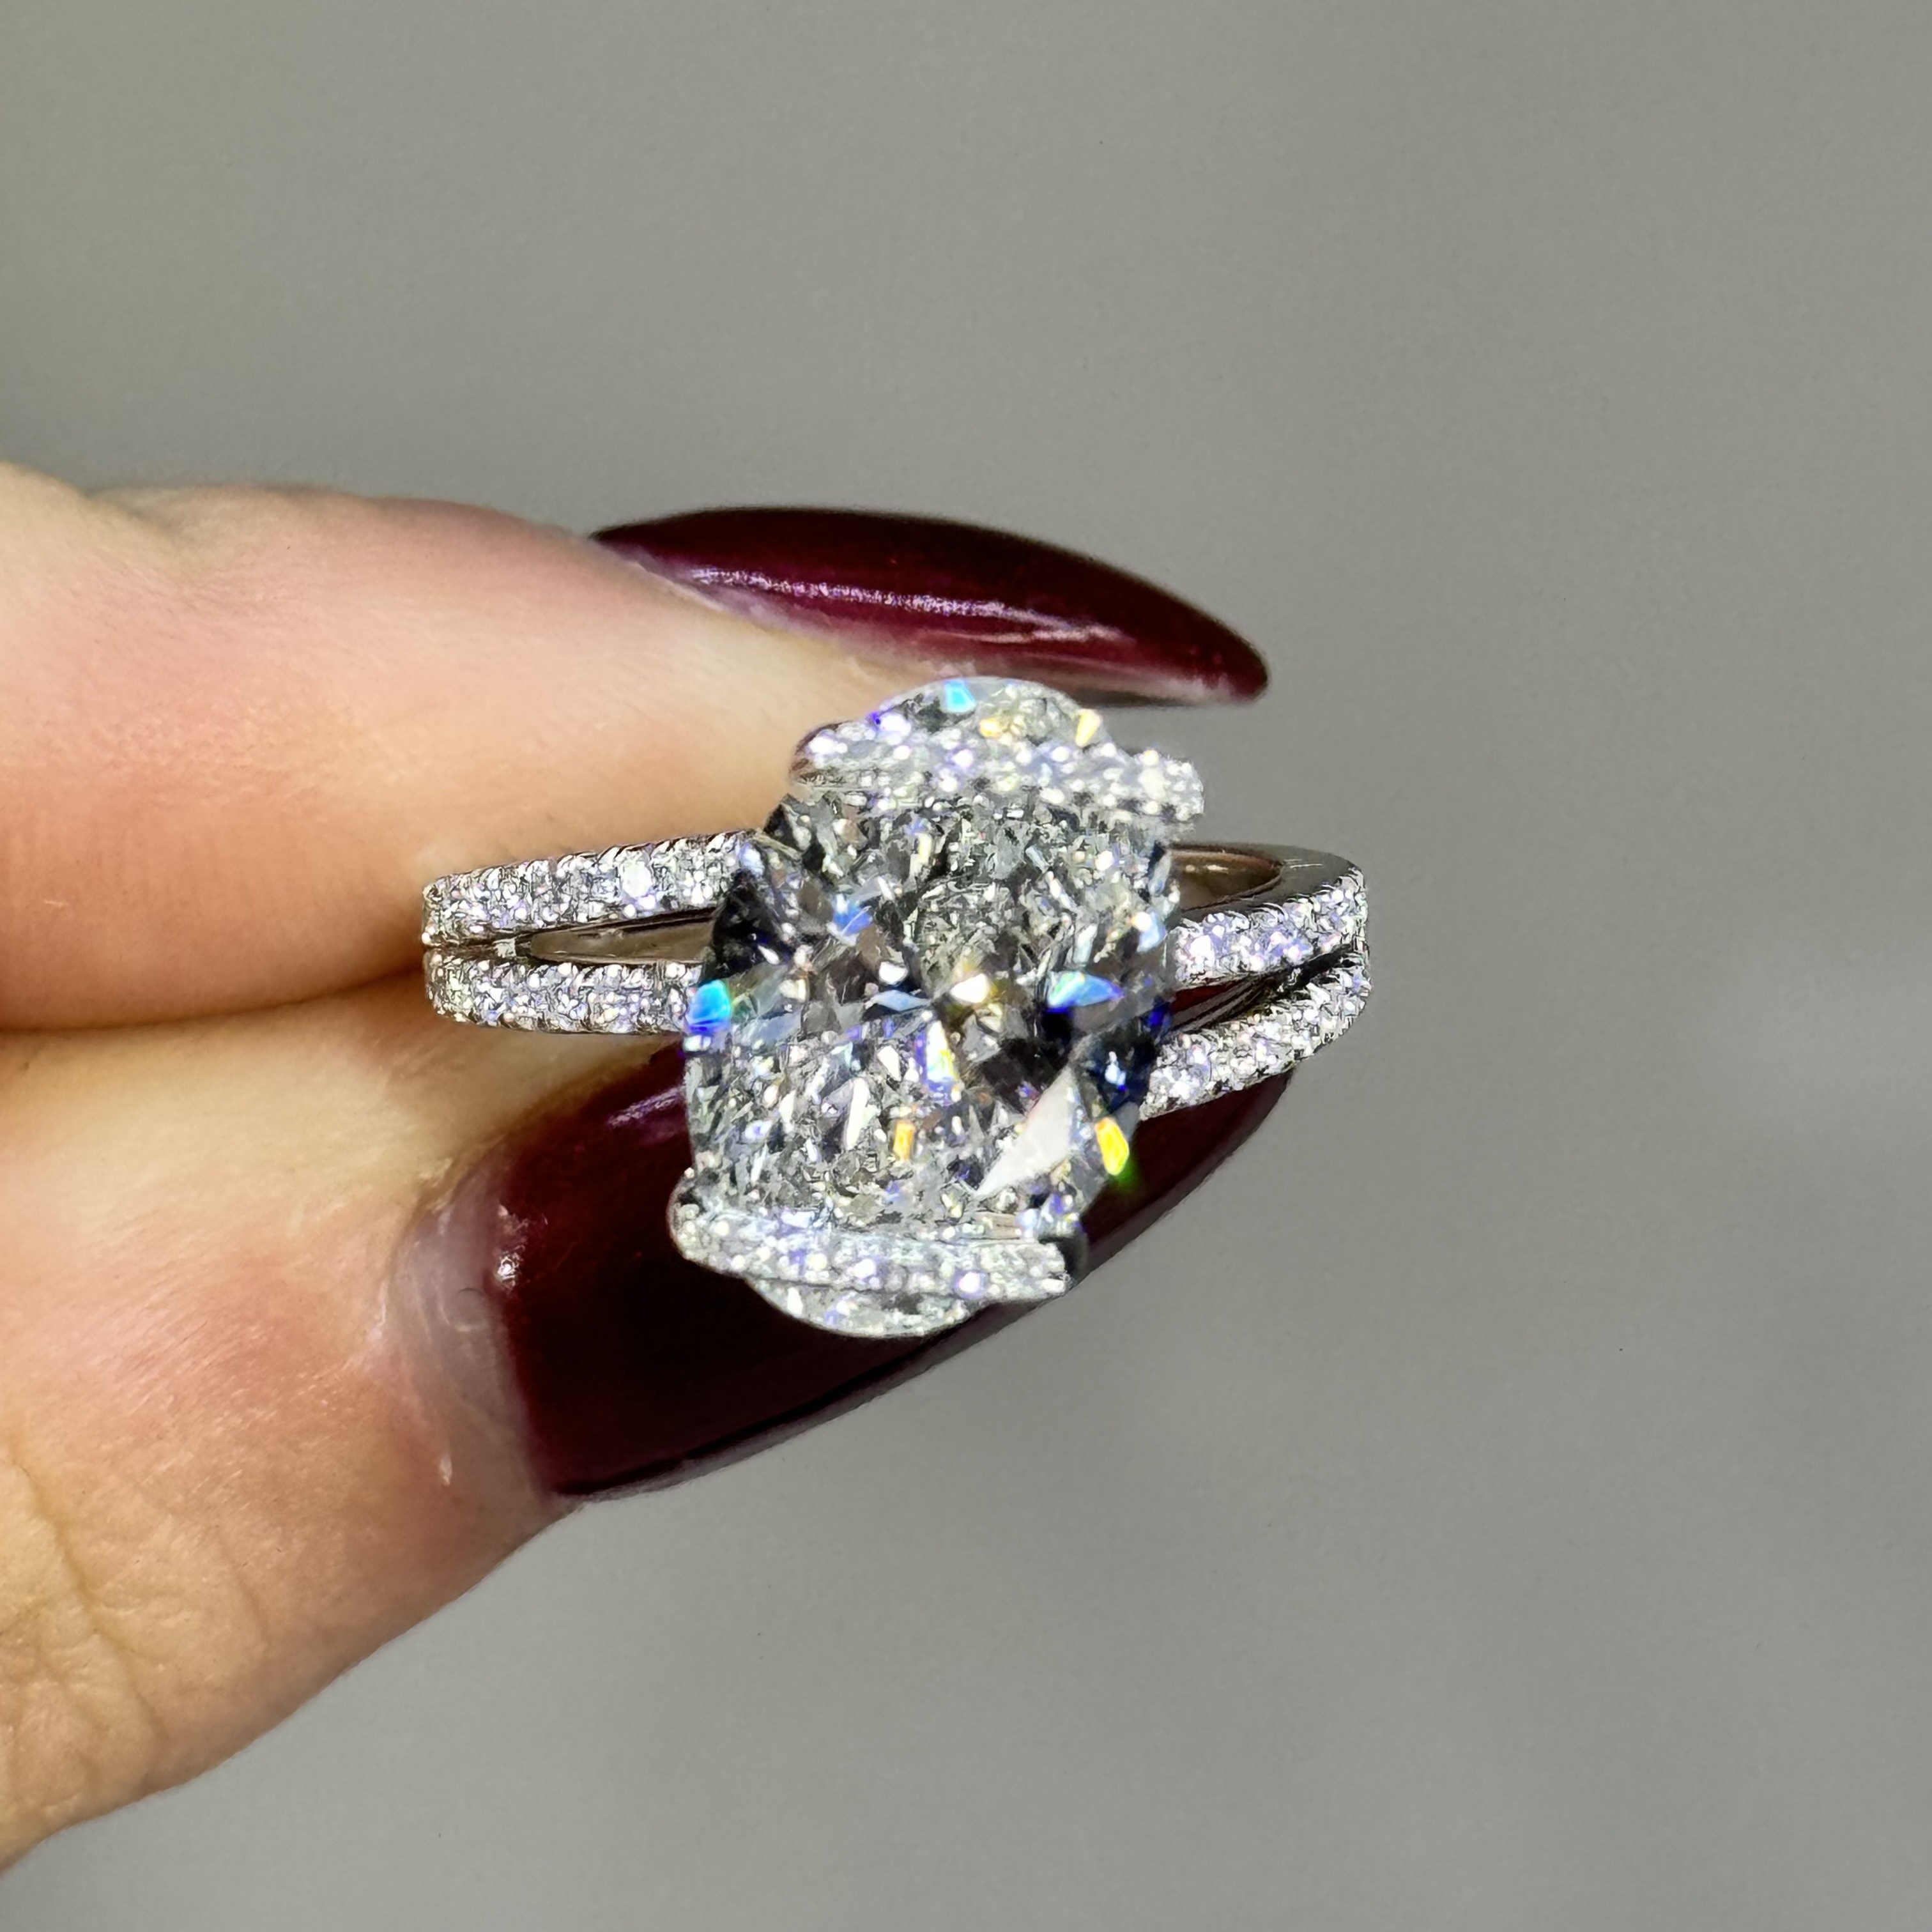 GIA 4.54 E VS2 Oval "Hailey" Engagement Ring Image 3 Forever Diamonds New York, NY